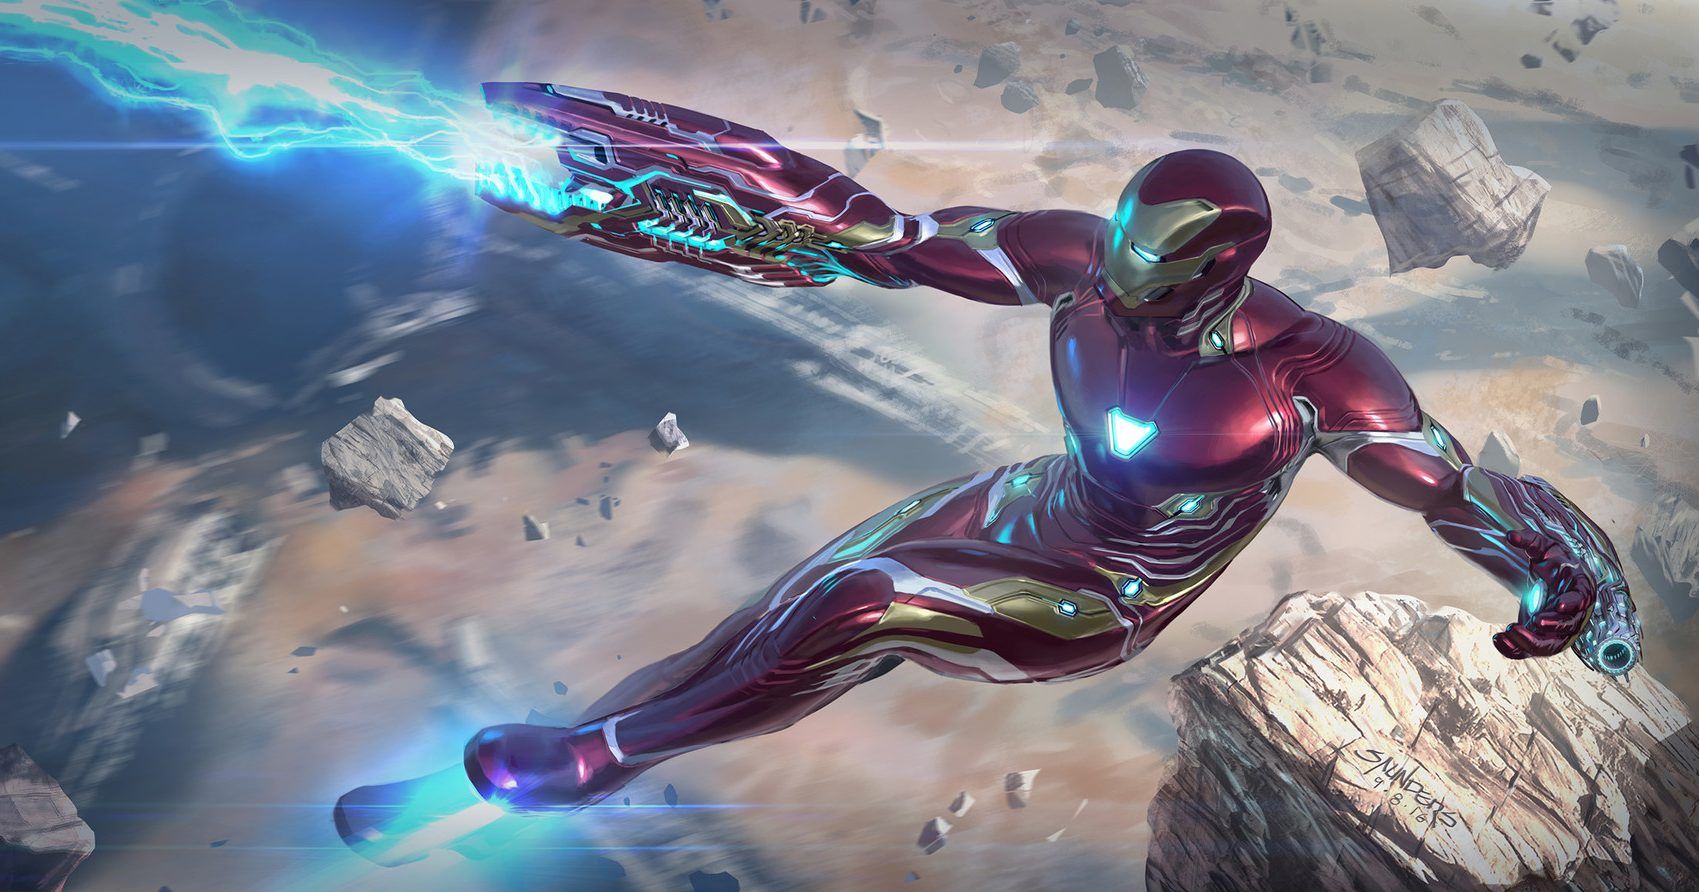 Iron Man: 10 Secrets About The Bleeding Edge Armor The MCU Never Revealed